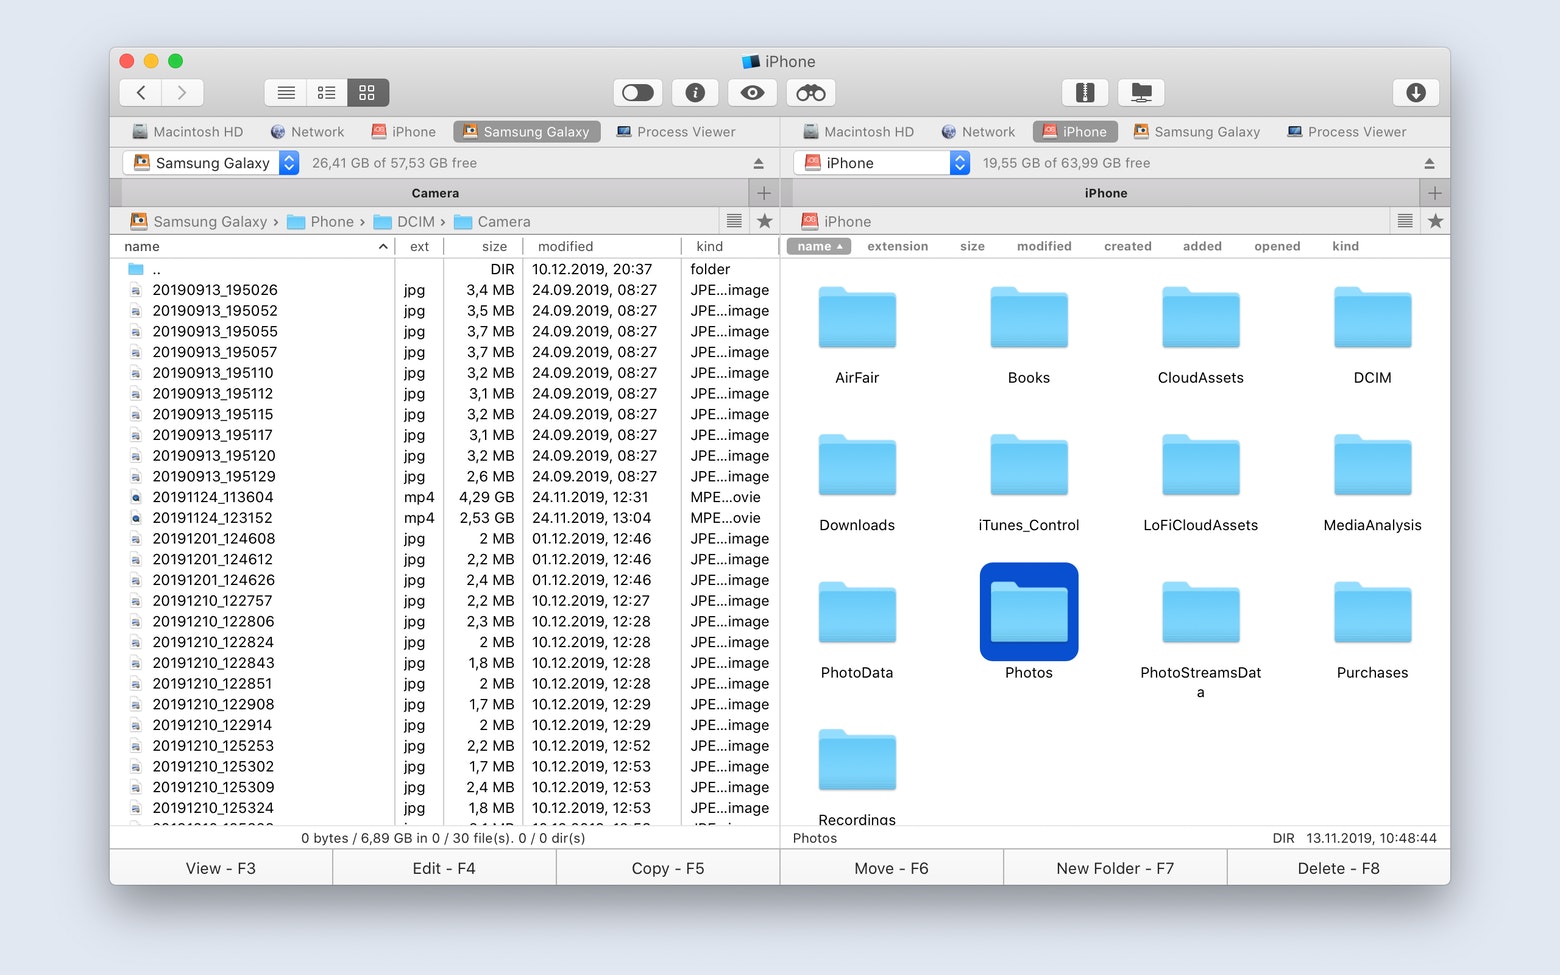 best file explorer for mac